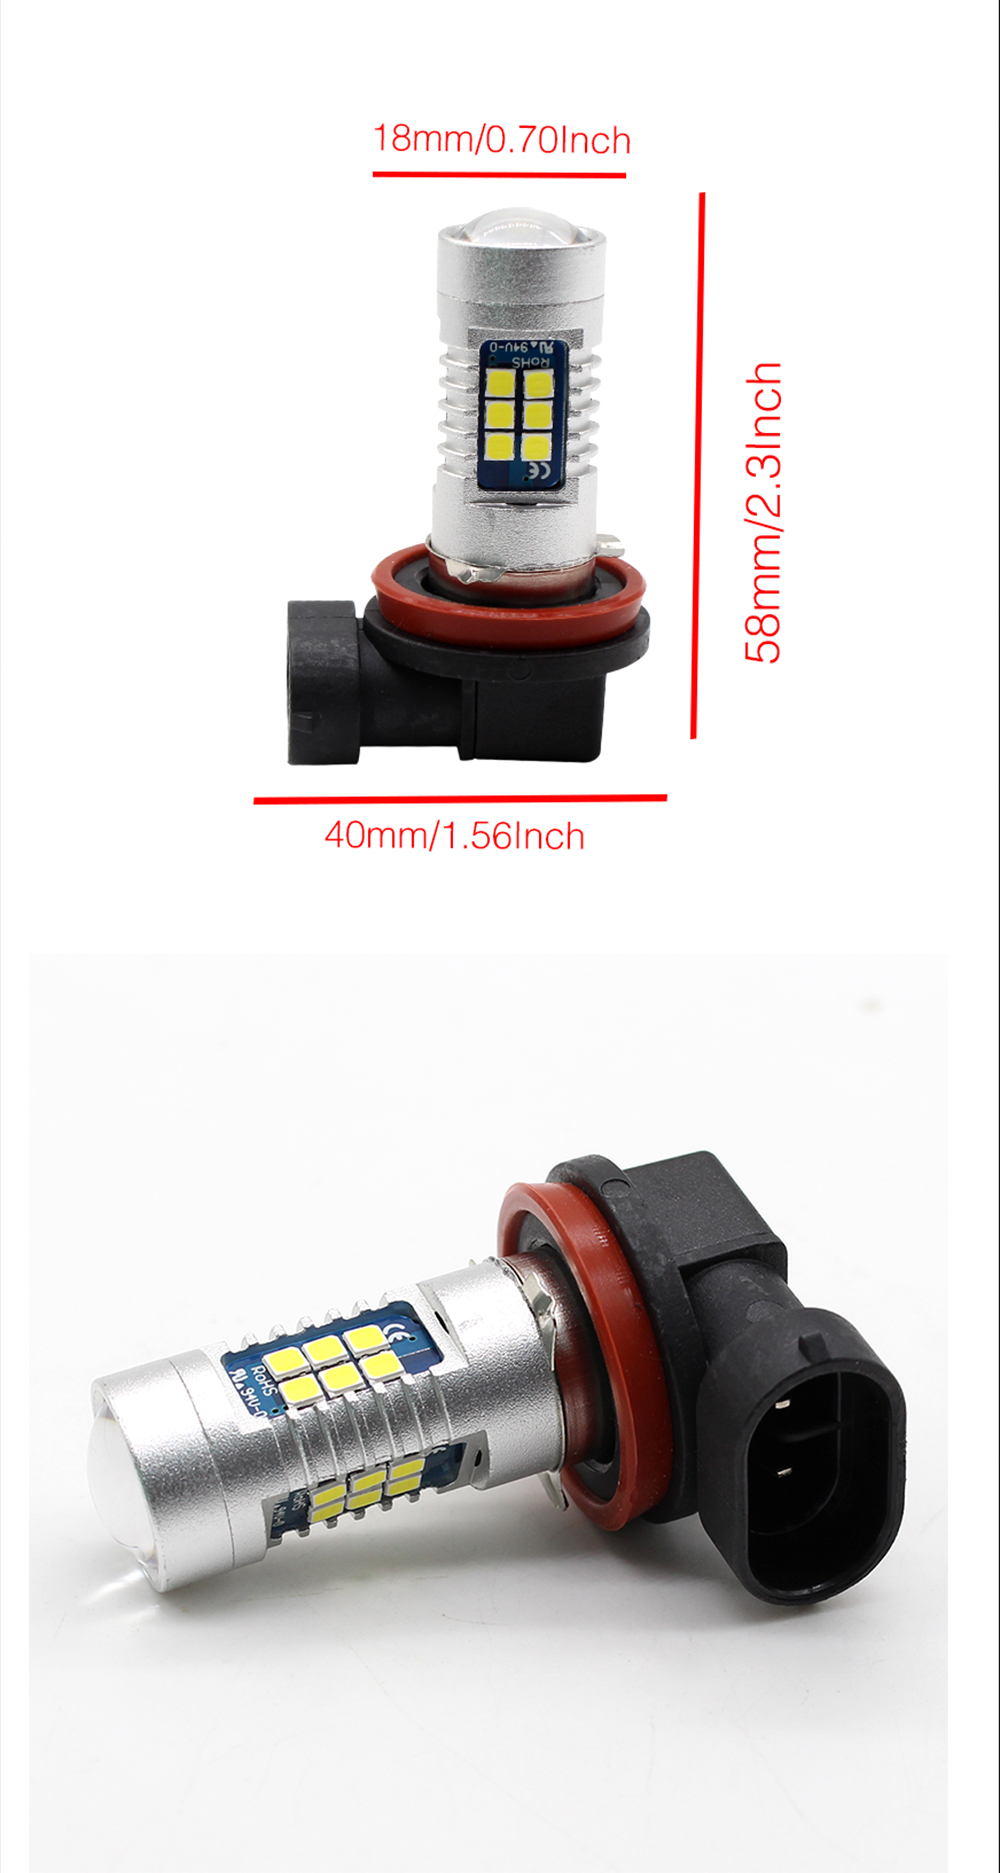 2PC H11/H8 10W High Power 3030 21 SMD LEDs Car FogLight Lamp DRL White Light Bulbs